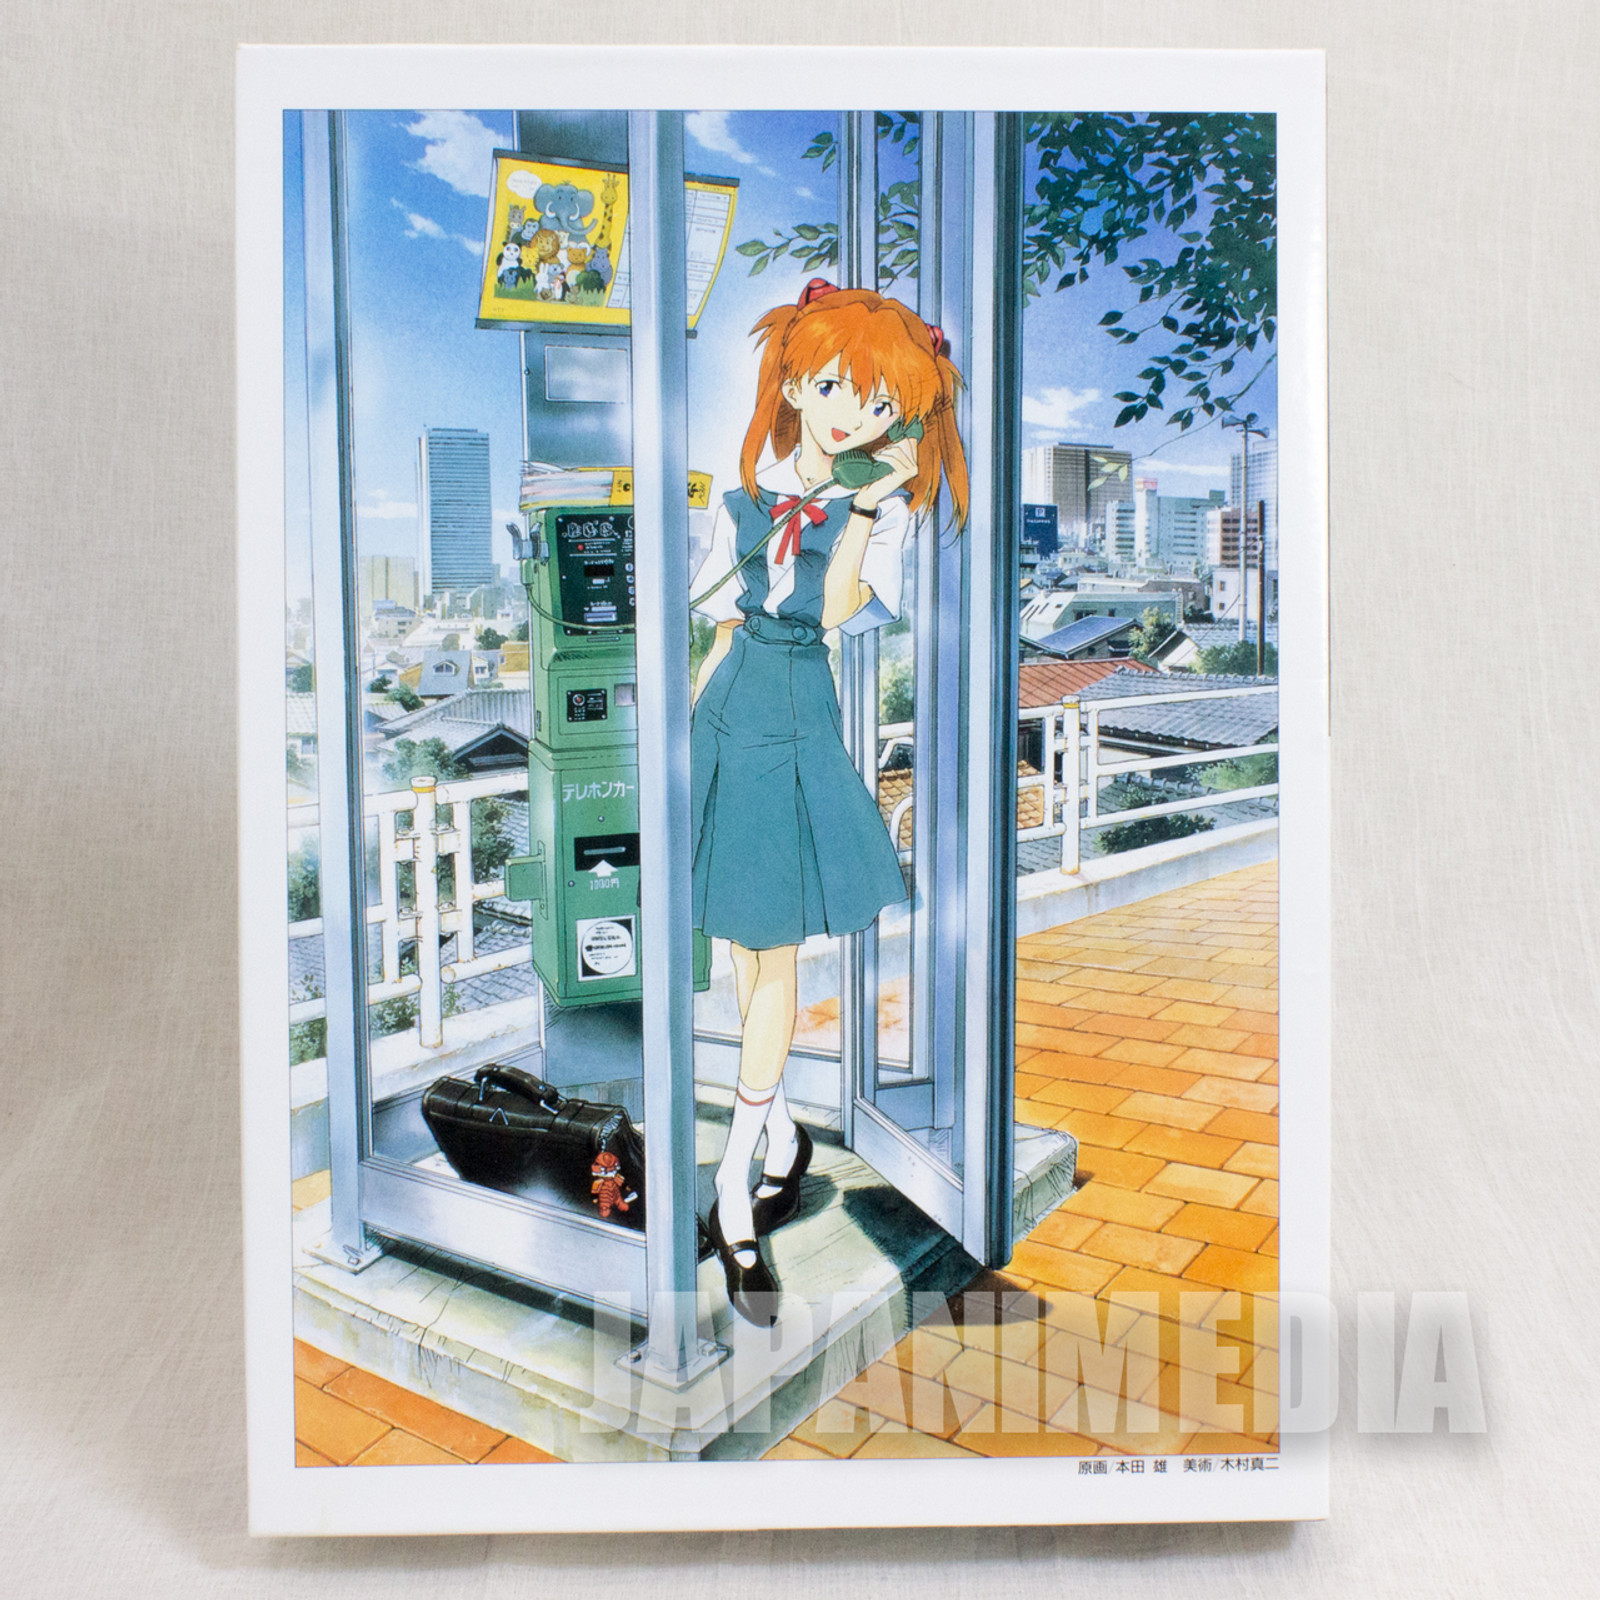 Evangelion Sohryu Asuka Langley Picture Puzzle - Through The Telephone - 500 pcs 52x38cm JAPAN ANIME